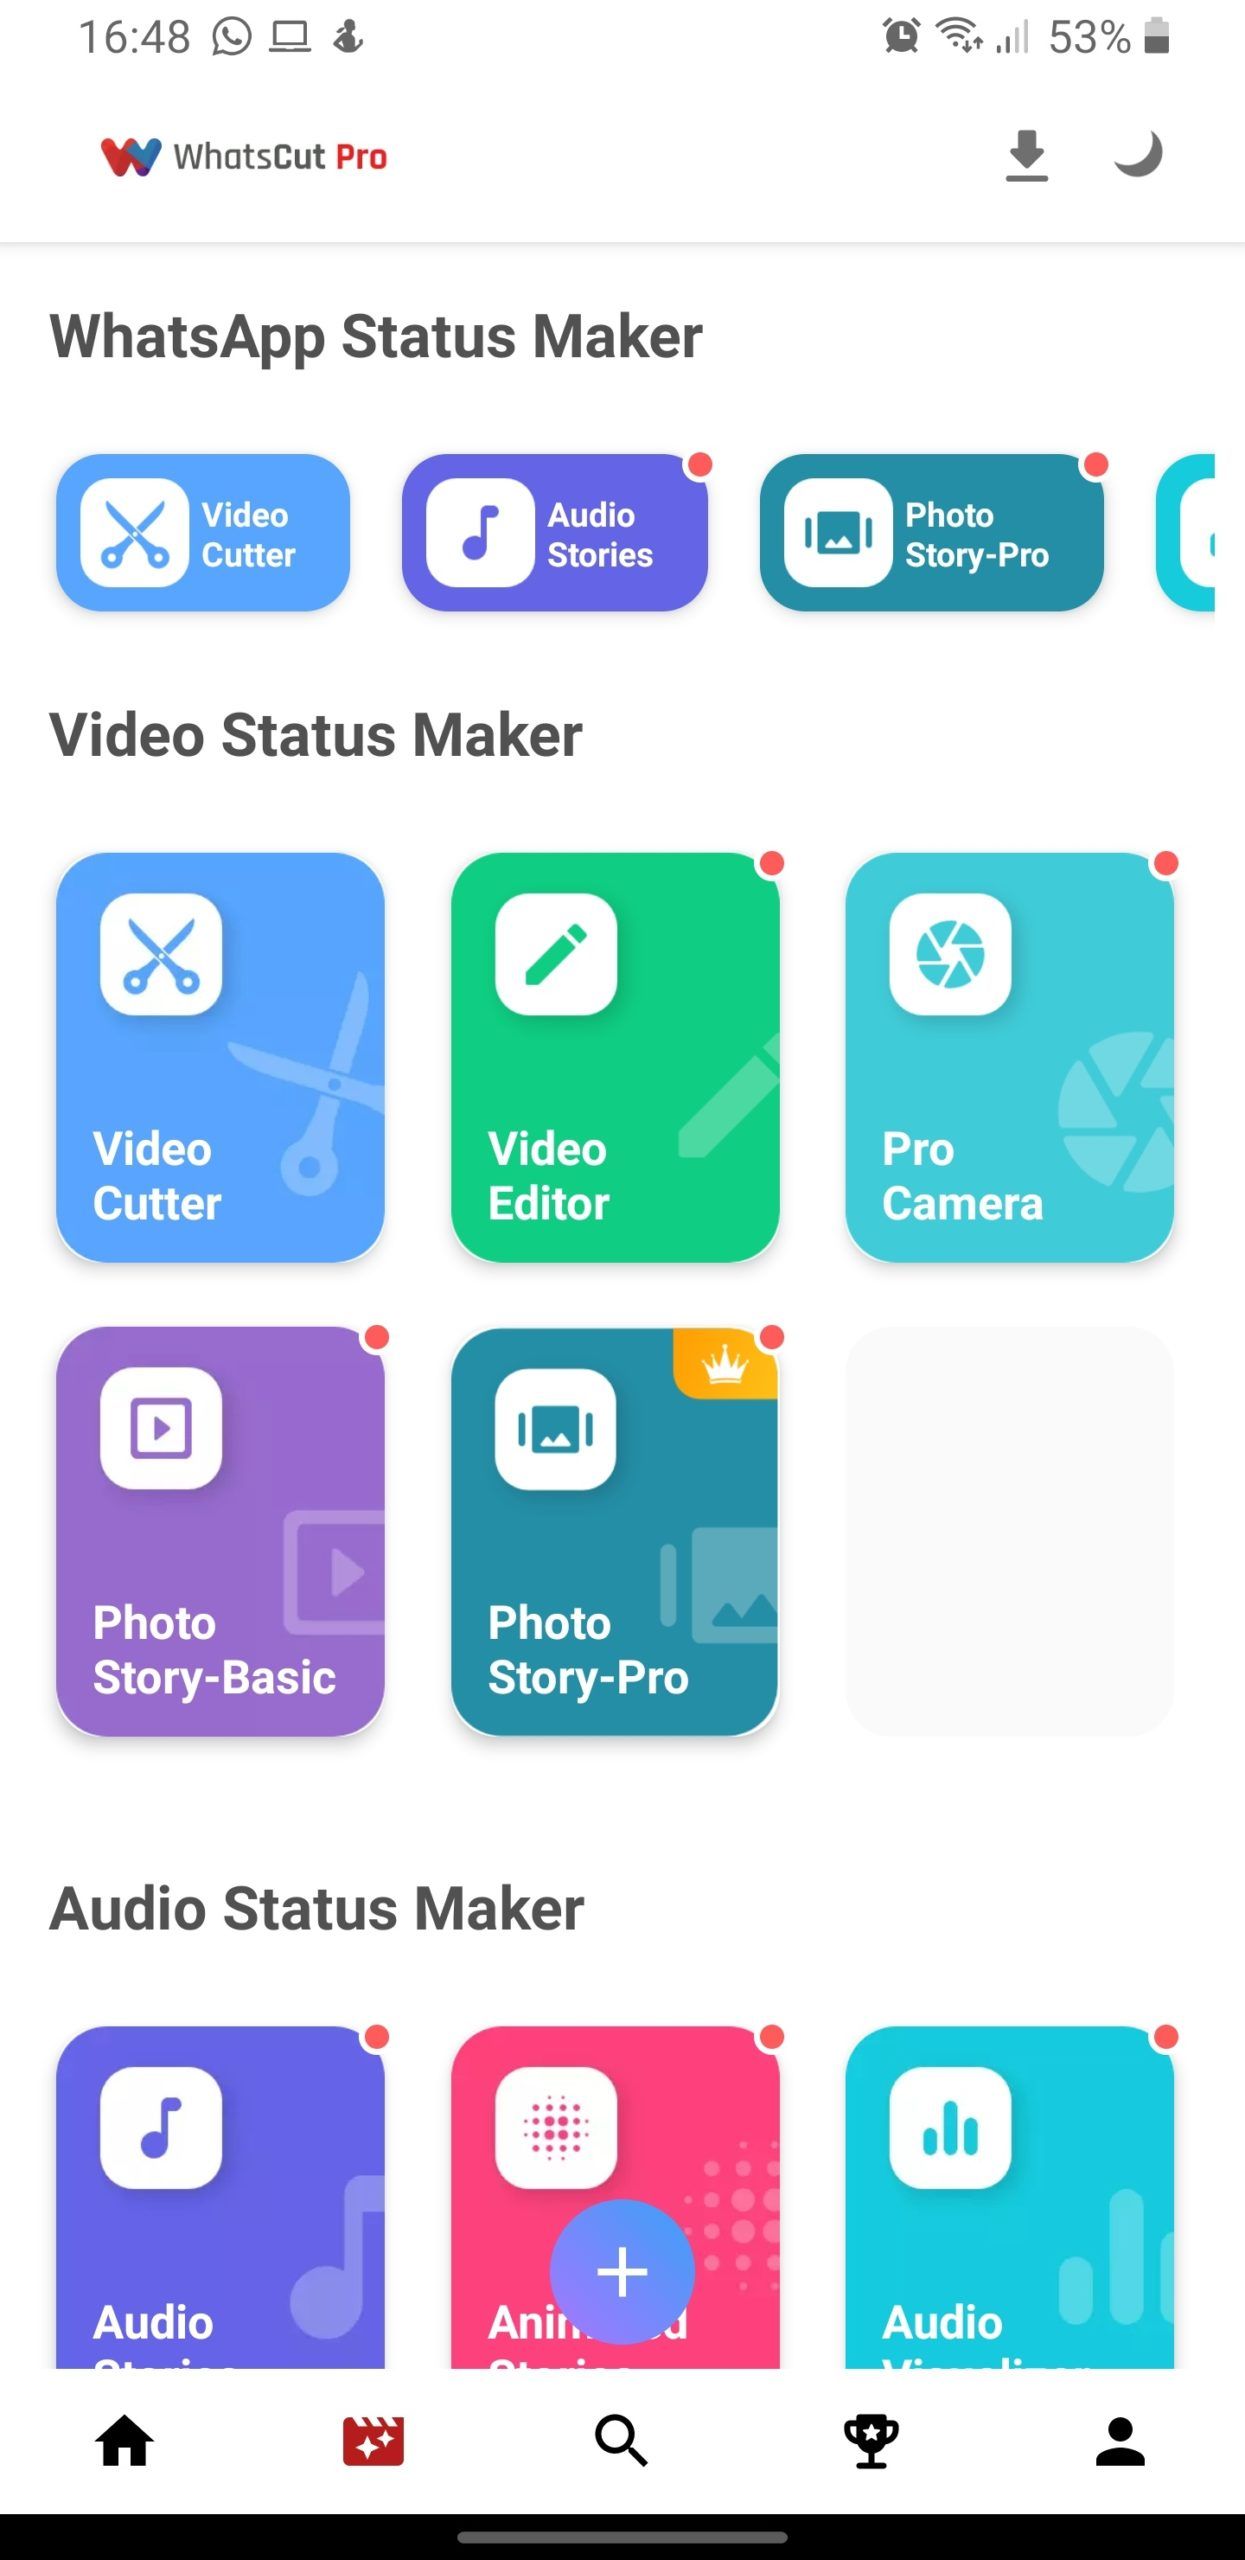 WhatsCut Pro App Screenshot - Tools Page